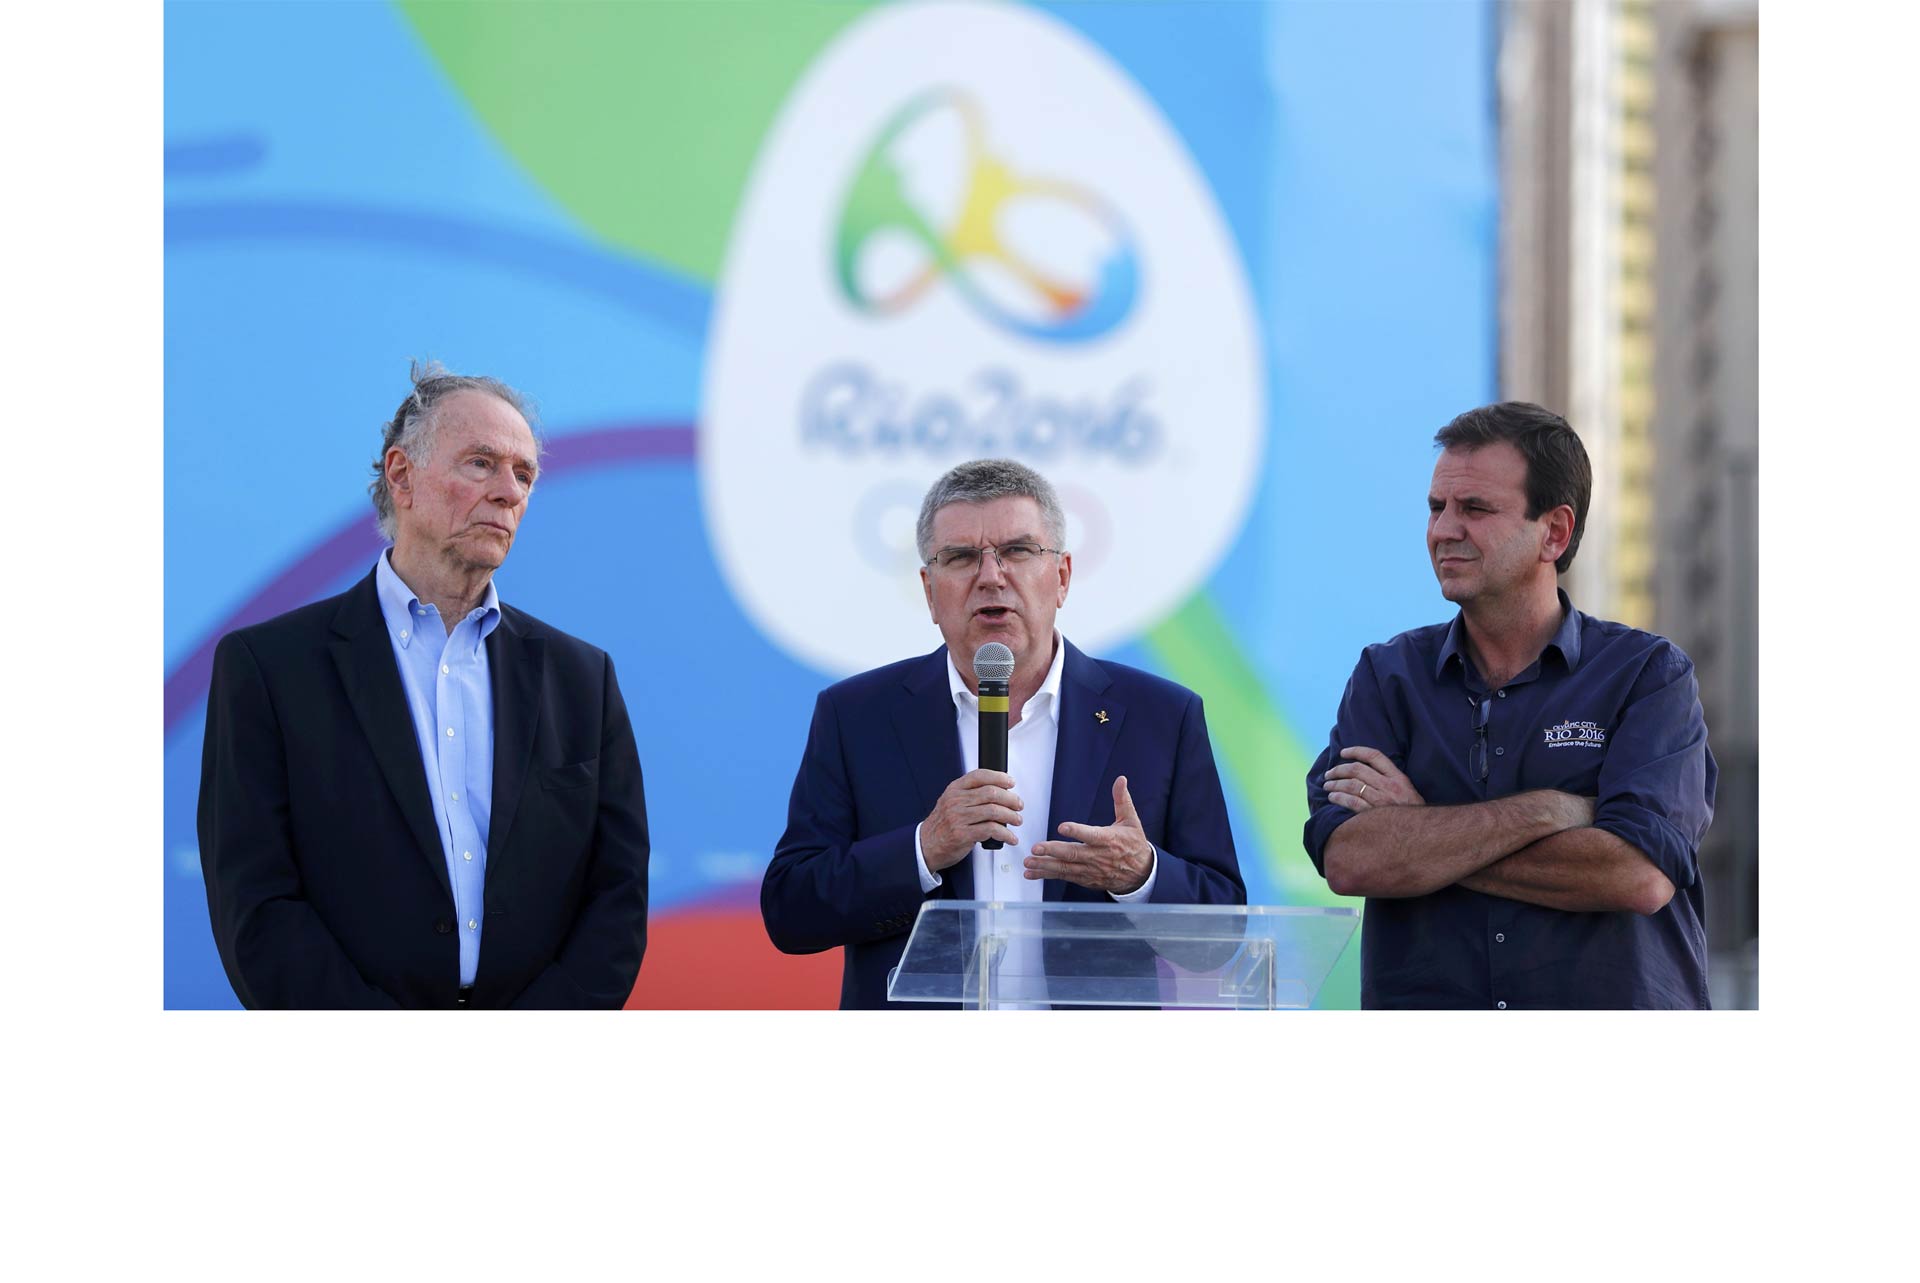 COI confiado en que Río 2016 será un éxito